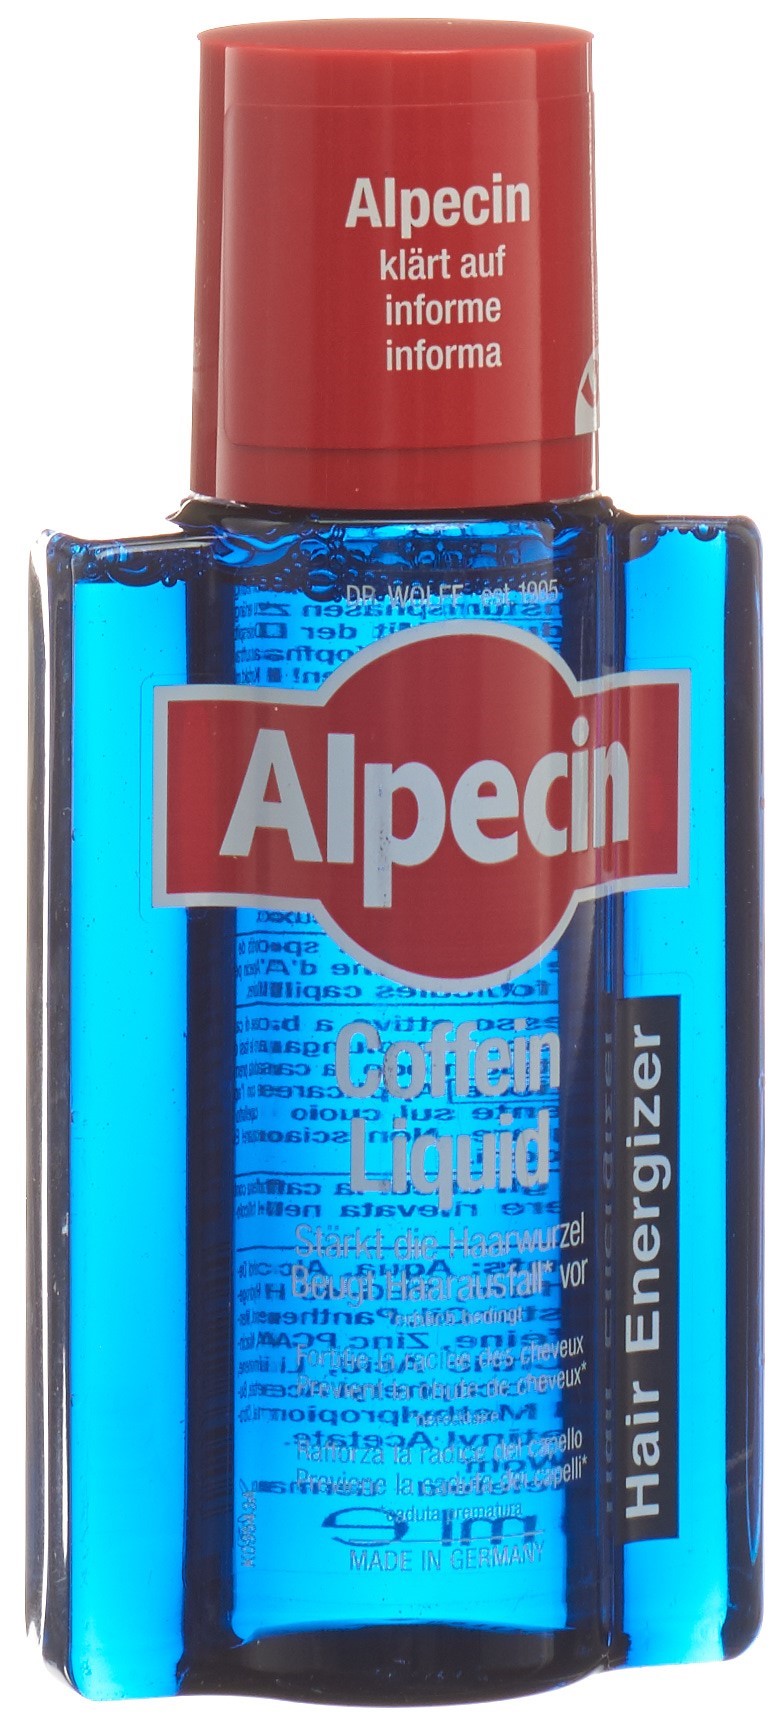 ALPECIN Hair Energizer Liquid Tonikum 200 ml